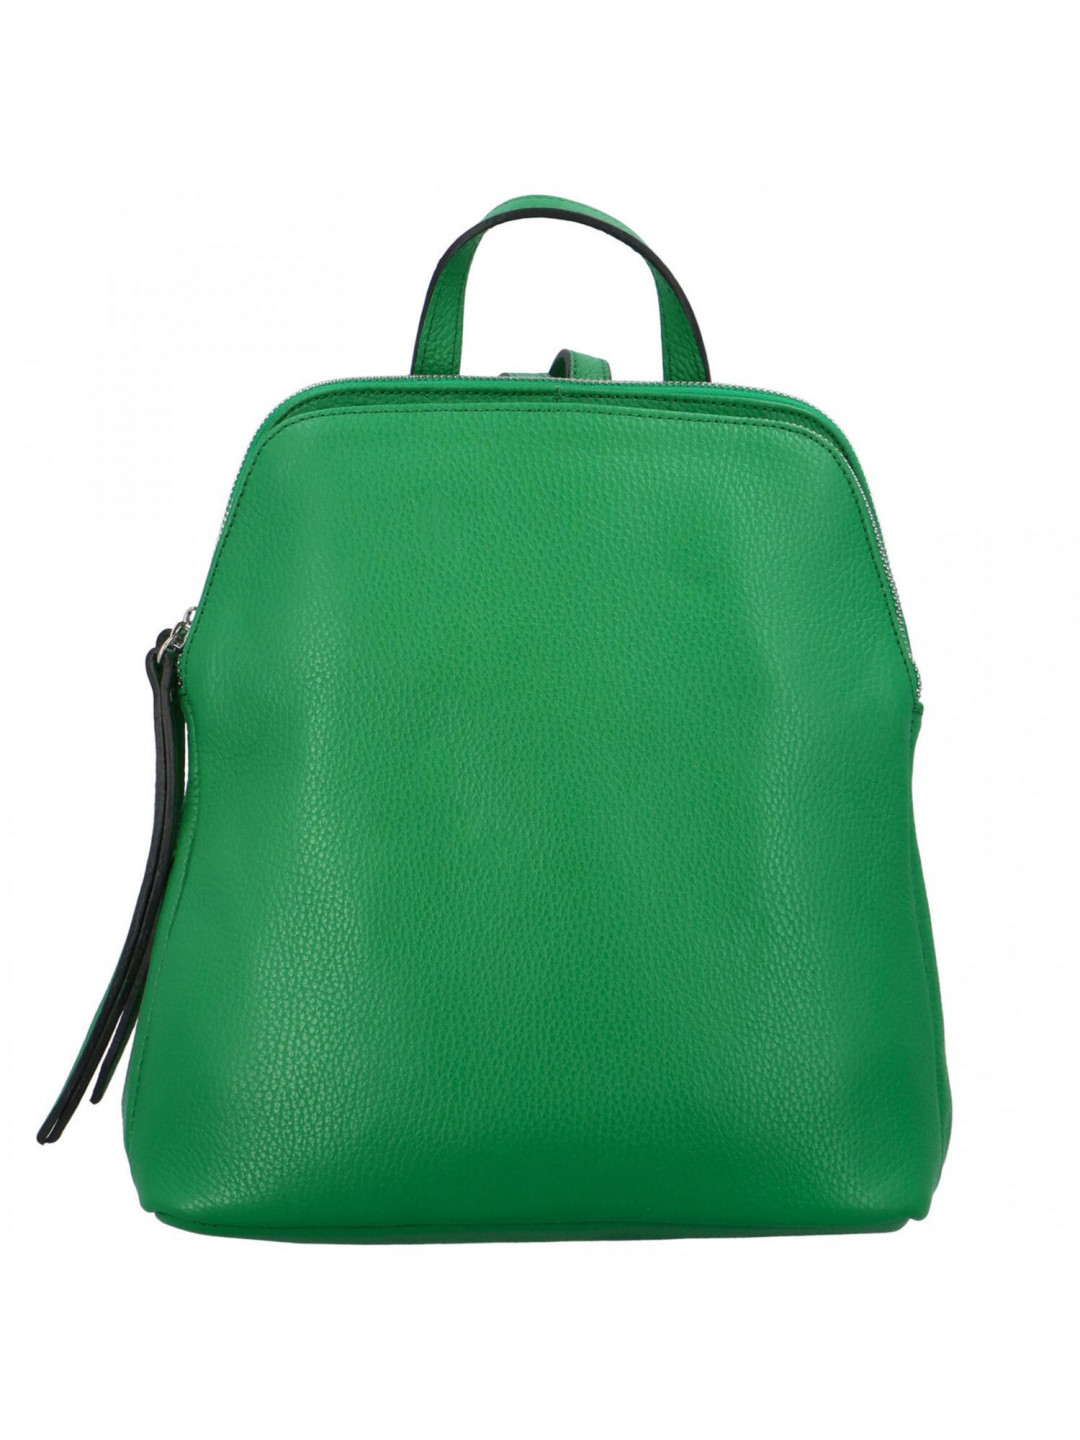 Dámský kožený batoh zelený – ItalY Madero